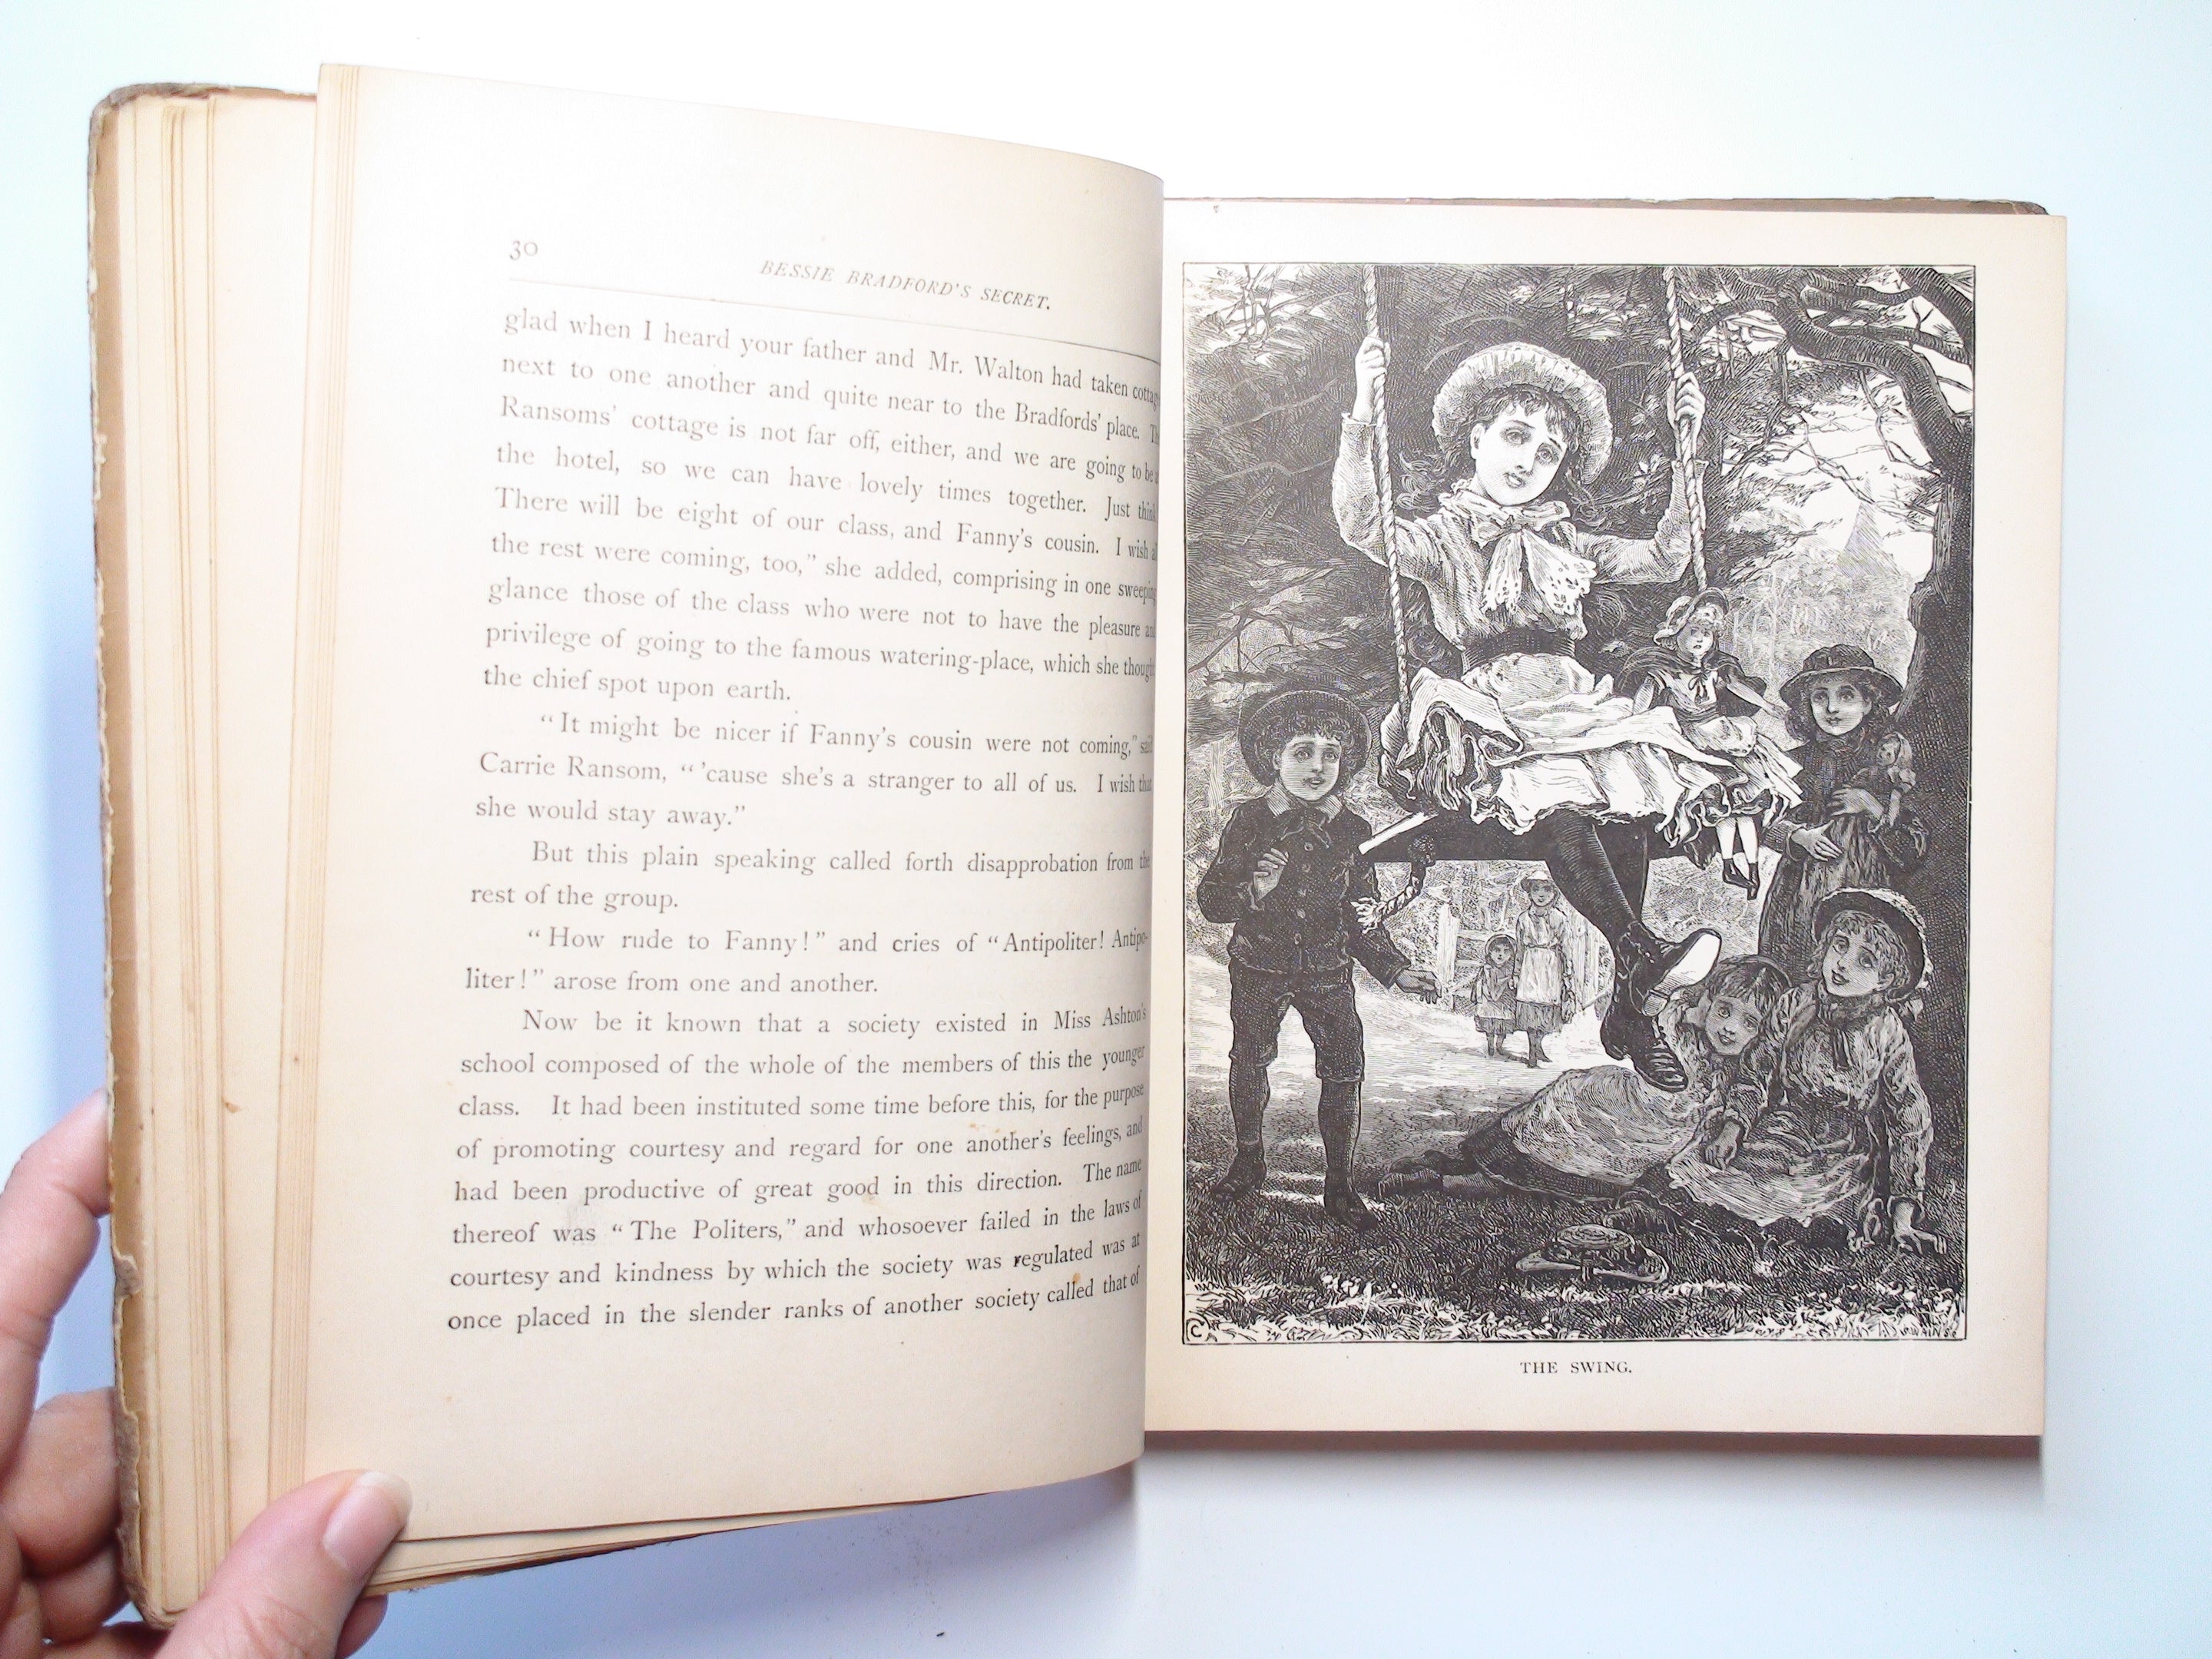 Bessy Bradford's Secret, by Joanna H. Mathews, Illustrated, 1st Ed., 1881